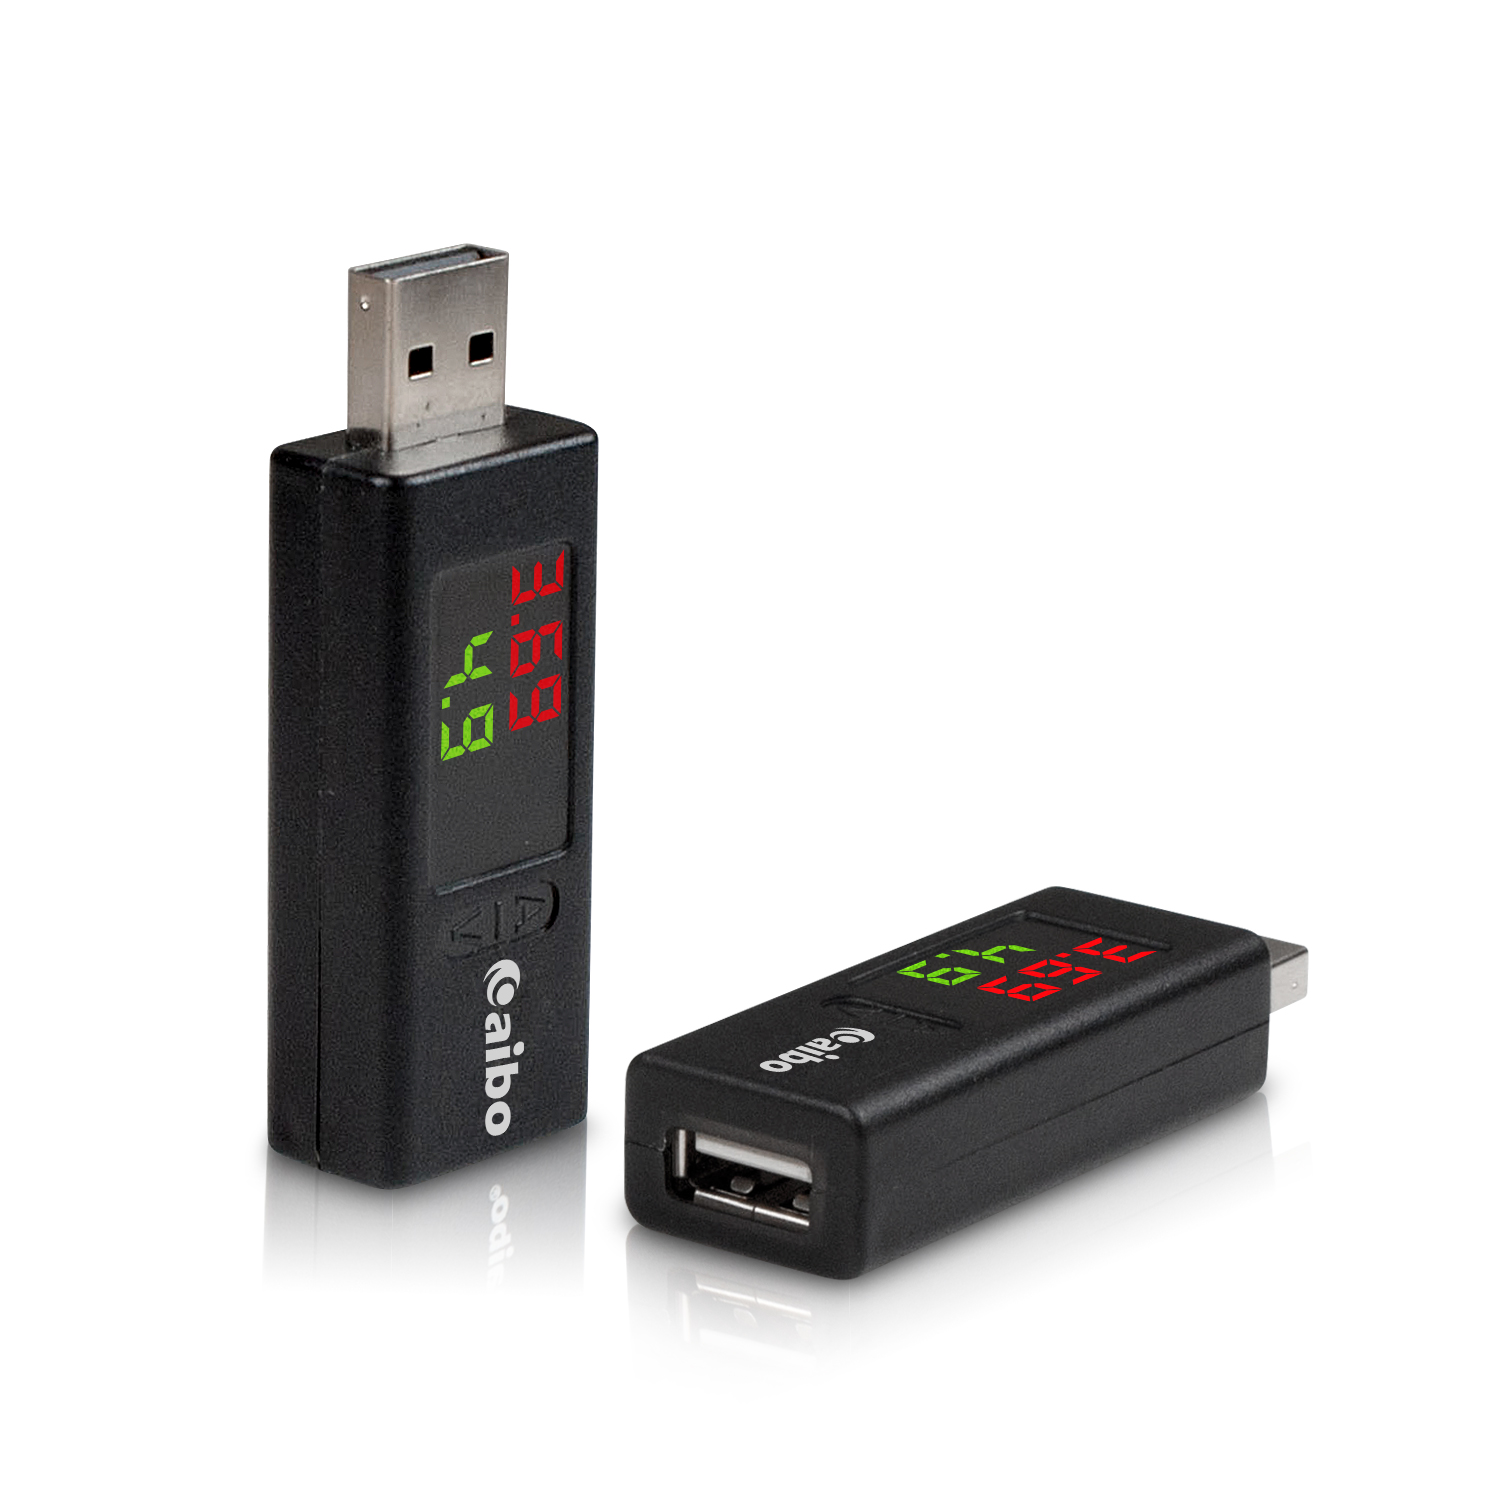 PMT031 USB數位電表 電壓電流檢測器(支援9V快充)